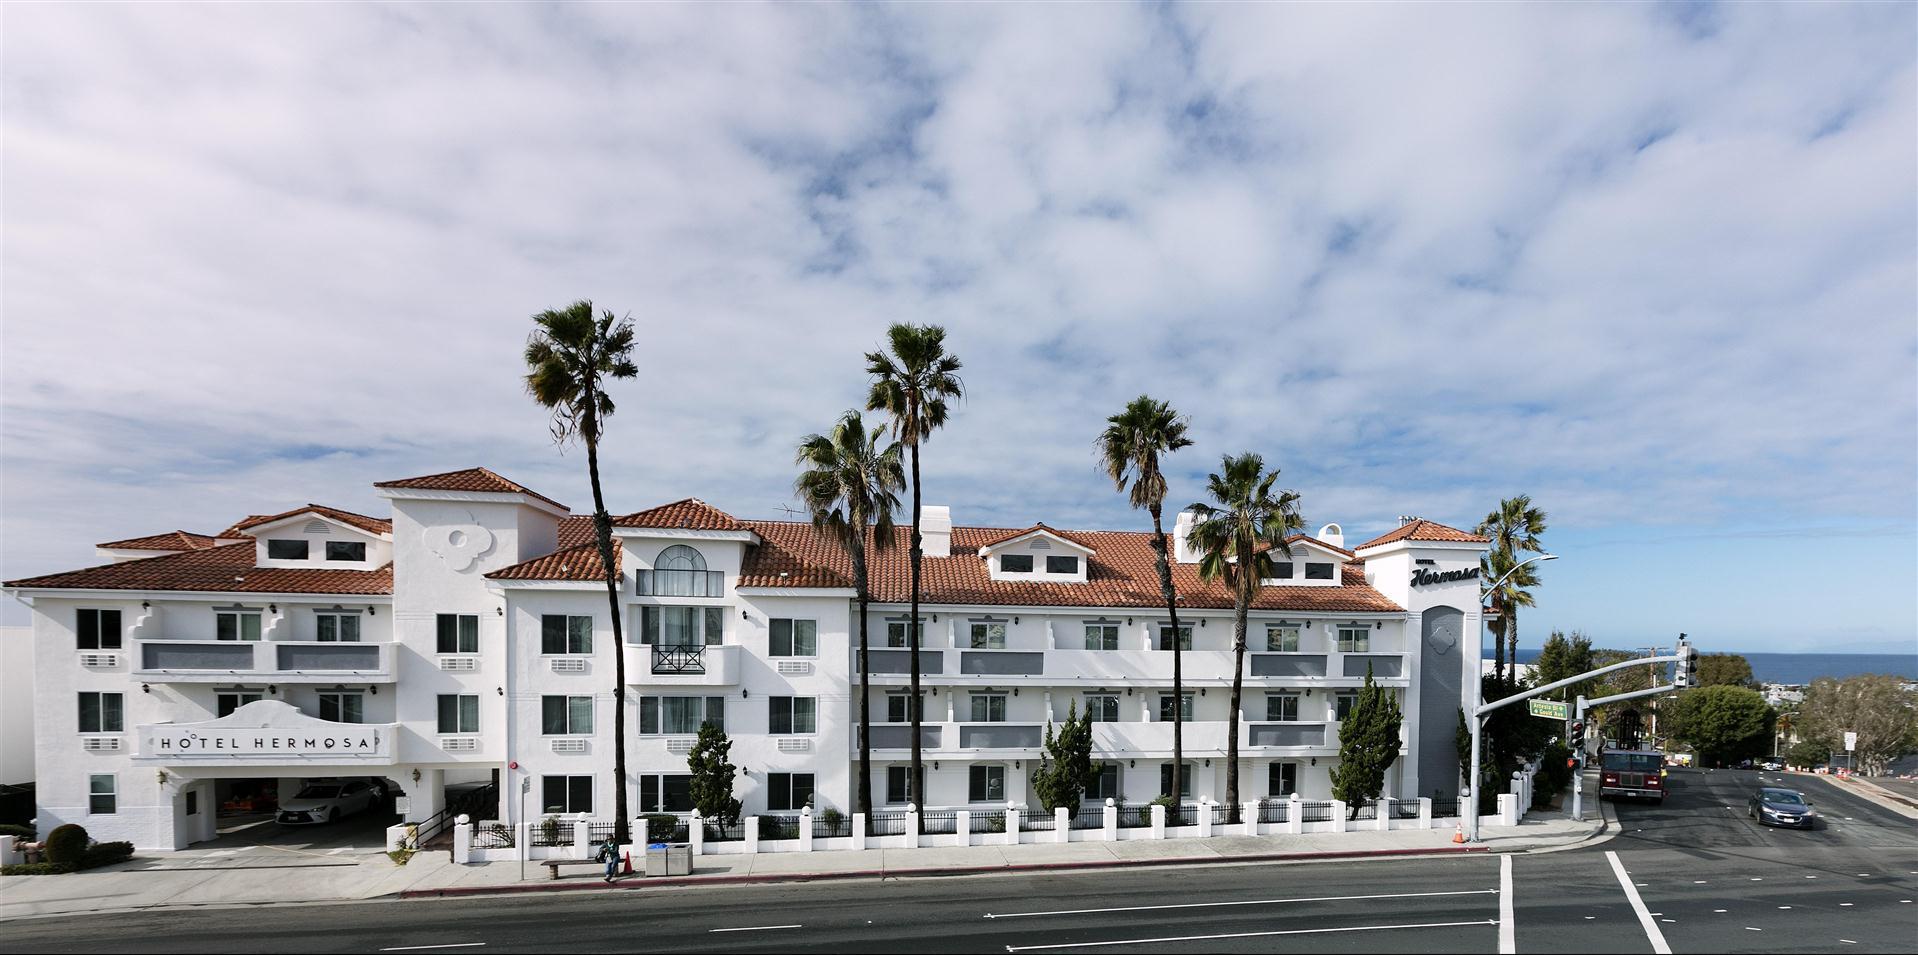 Hotel Hermosa in Hermosa Beach, CA